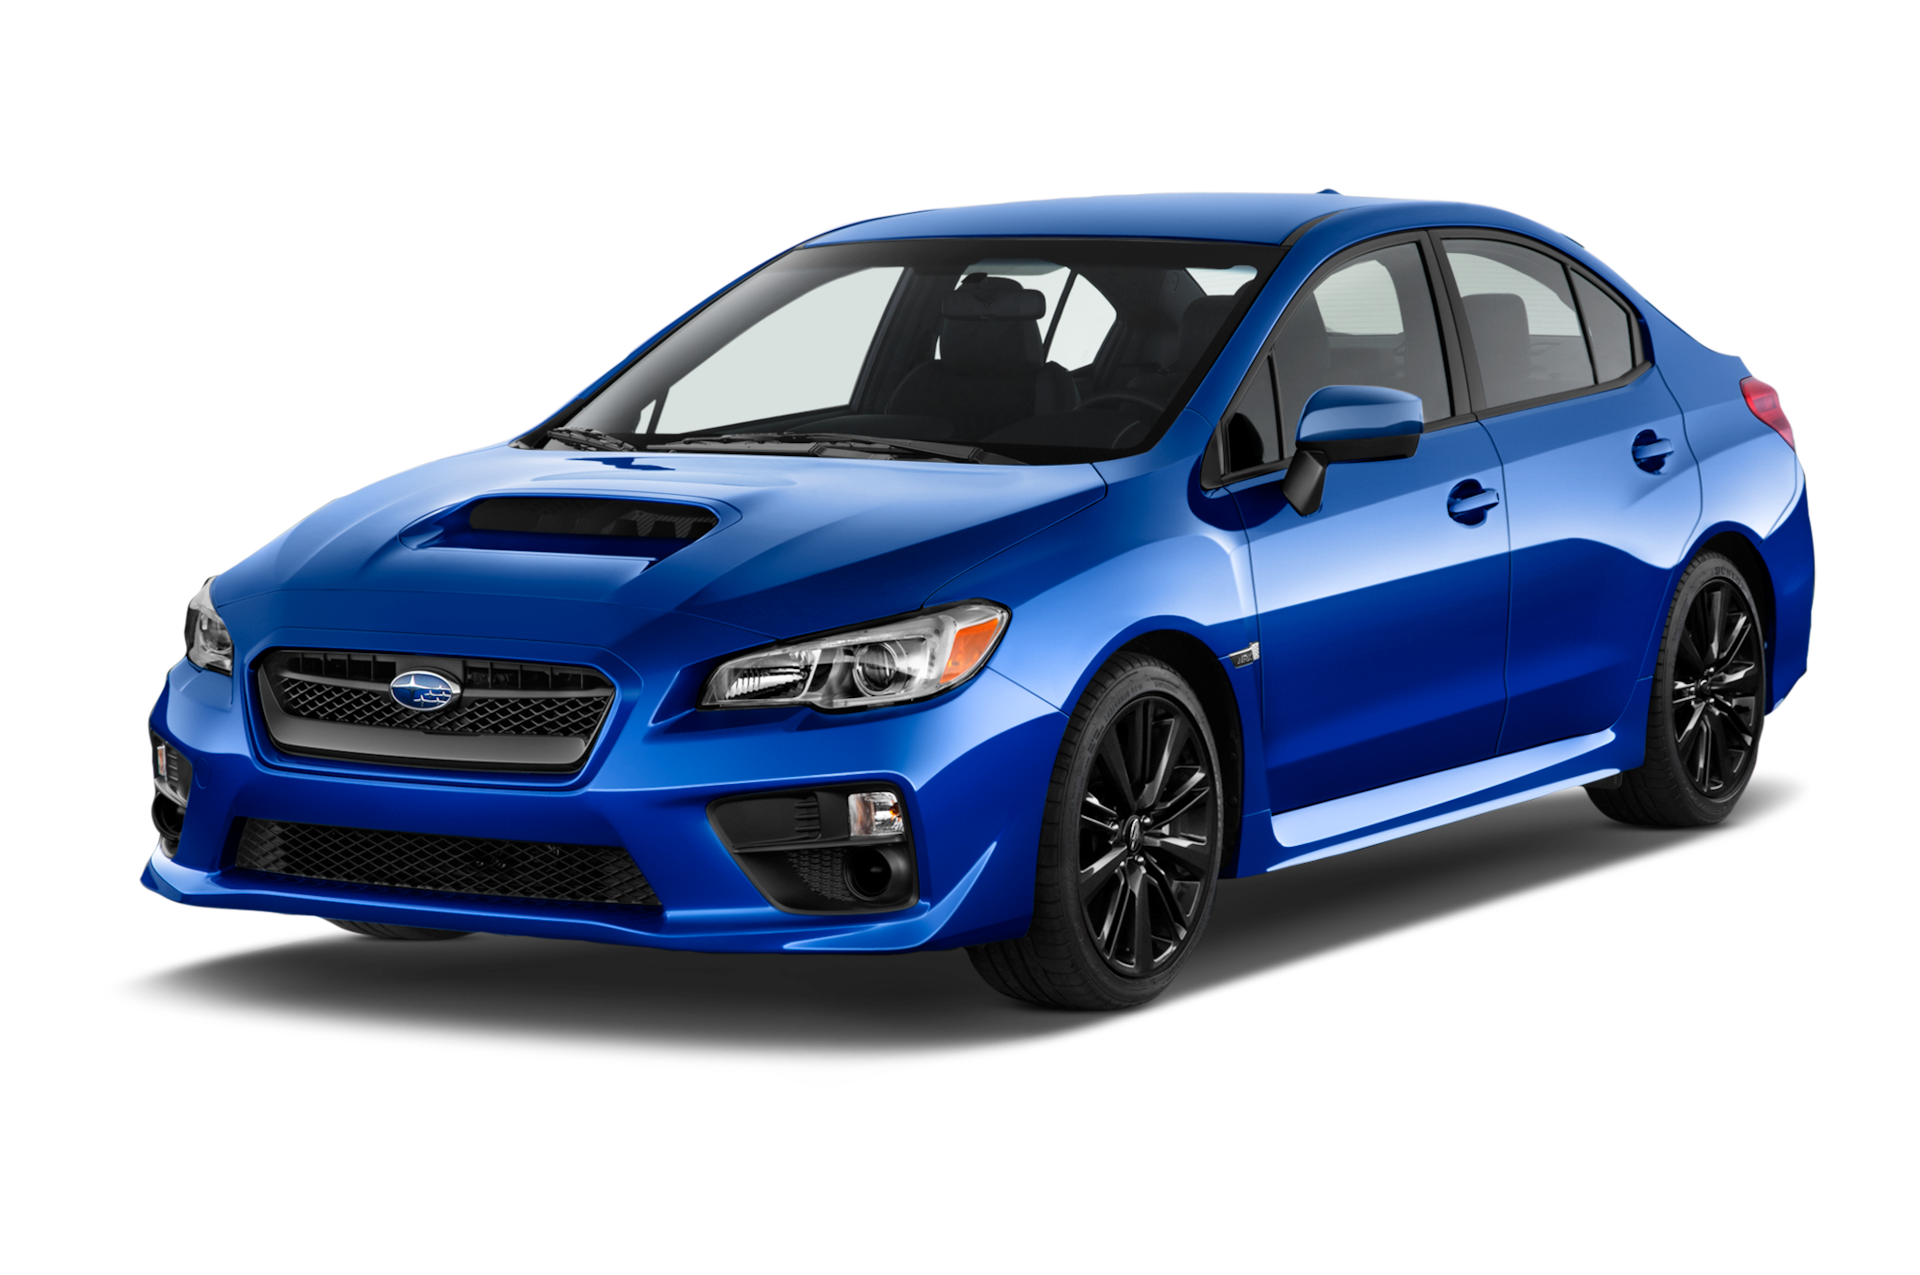 2015 Subaru WRX Prices, Reviews, and Photos - MotorTrend